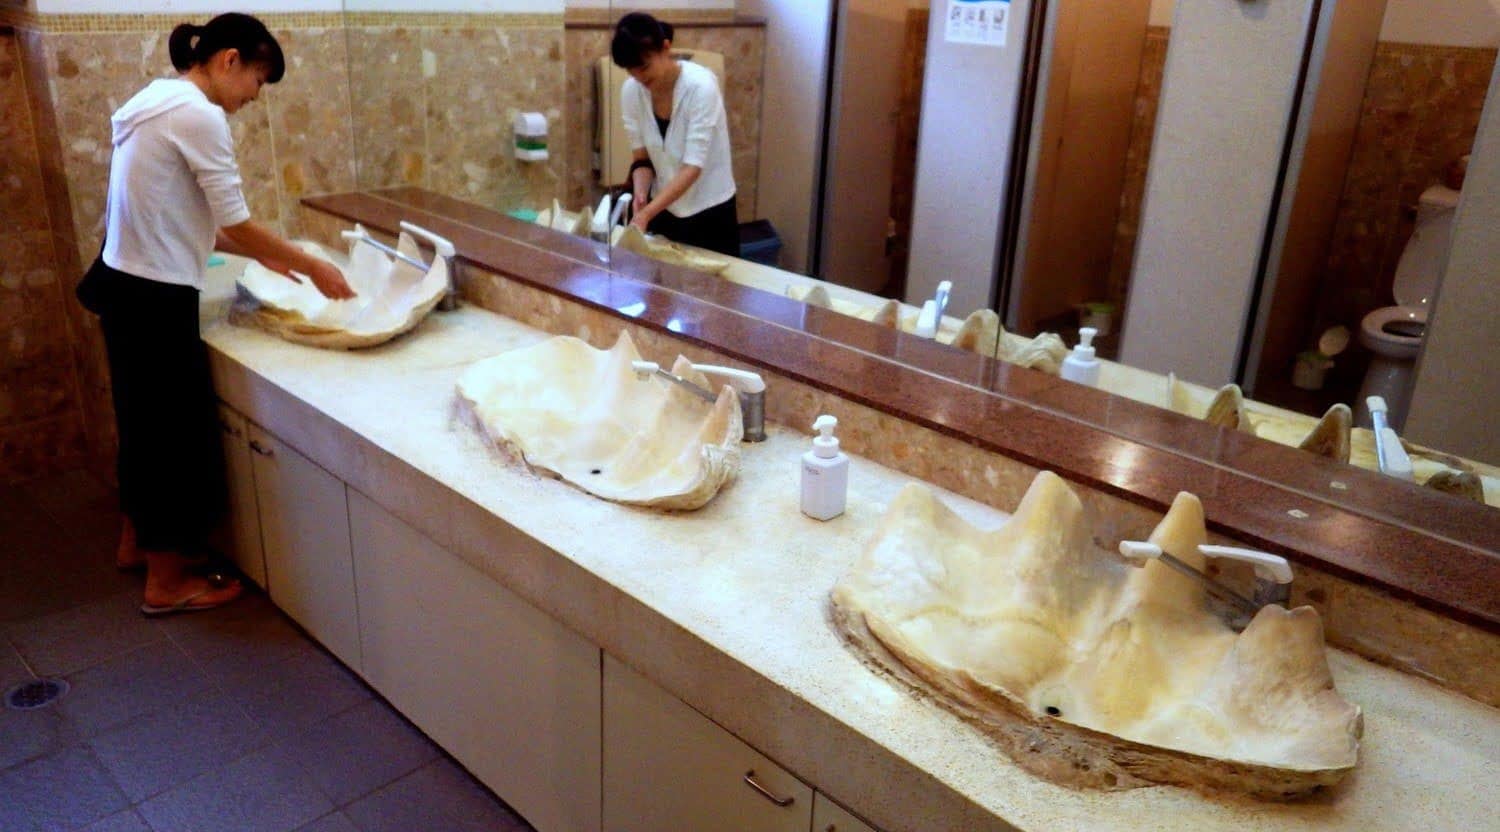 openbaar toilet in Okinawa